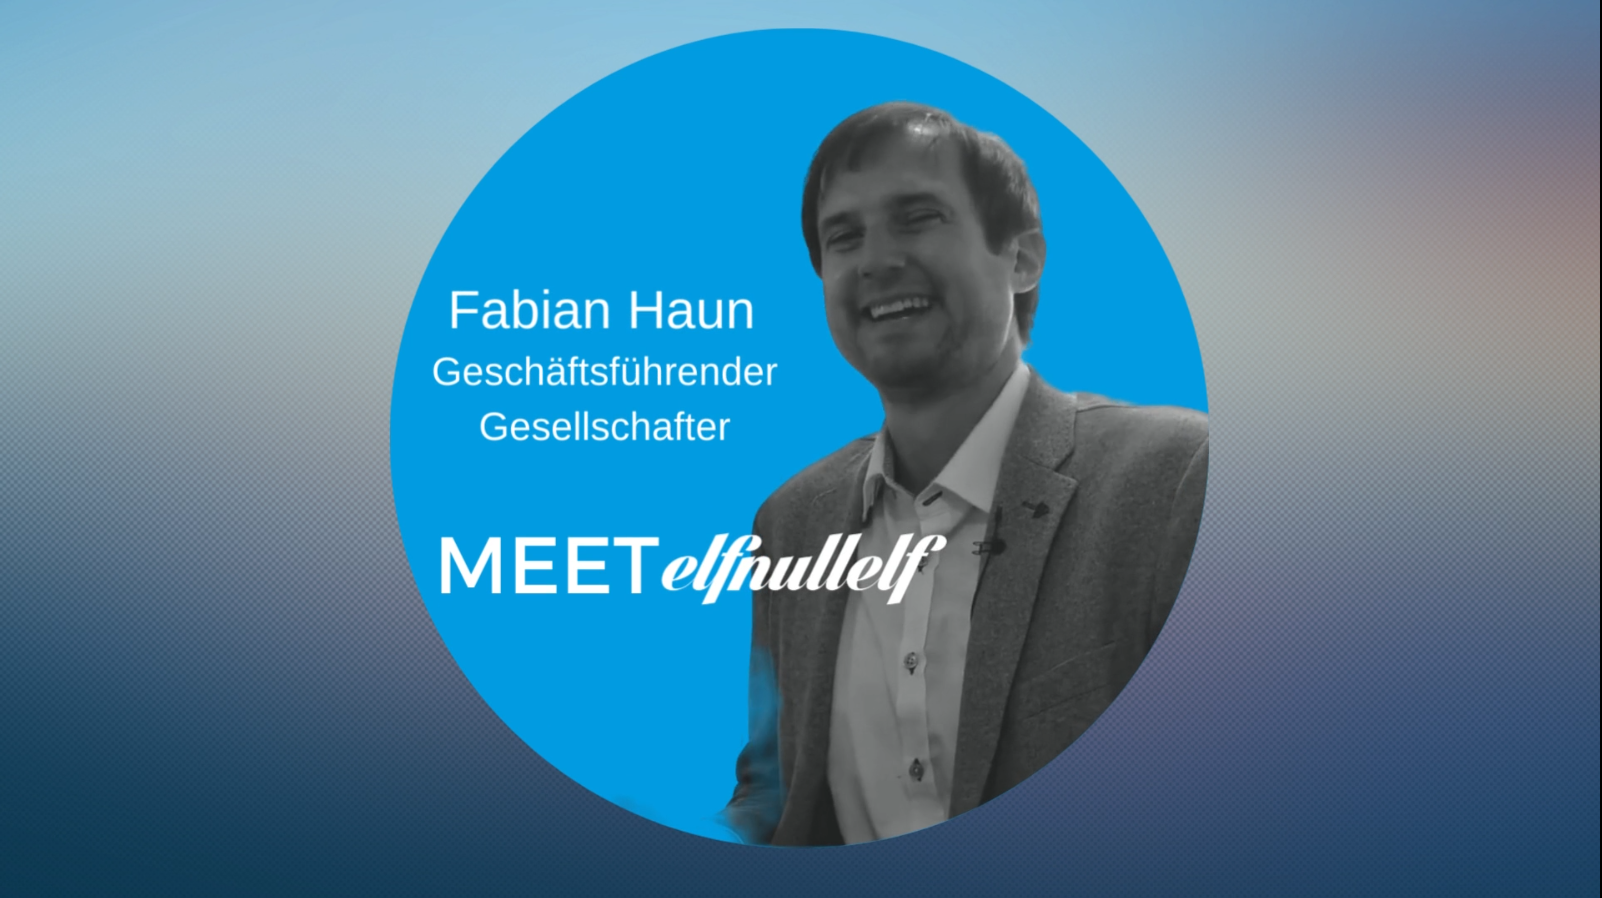 Meet elfnullelf – Fabian Haun